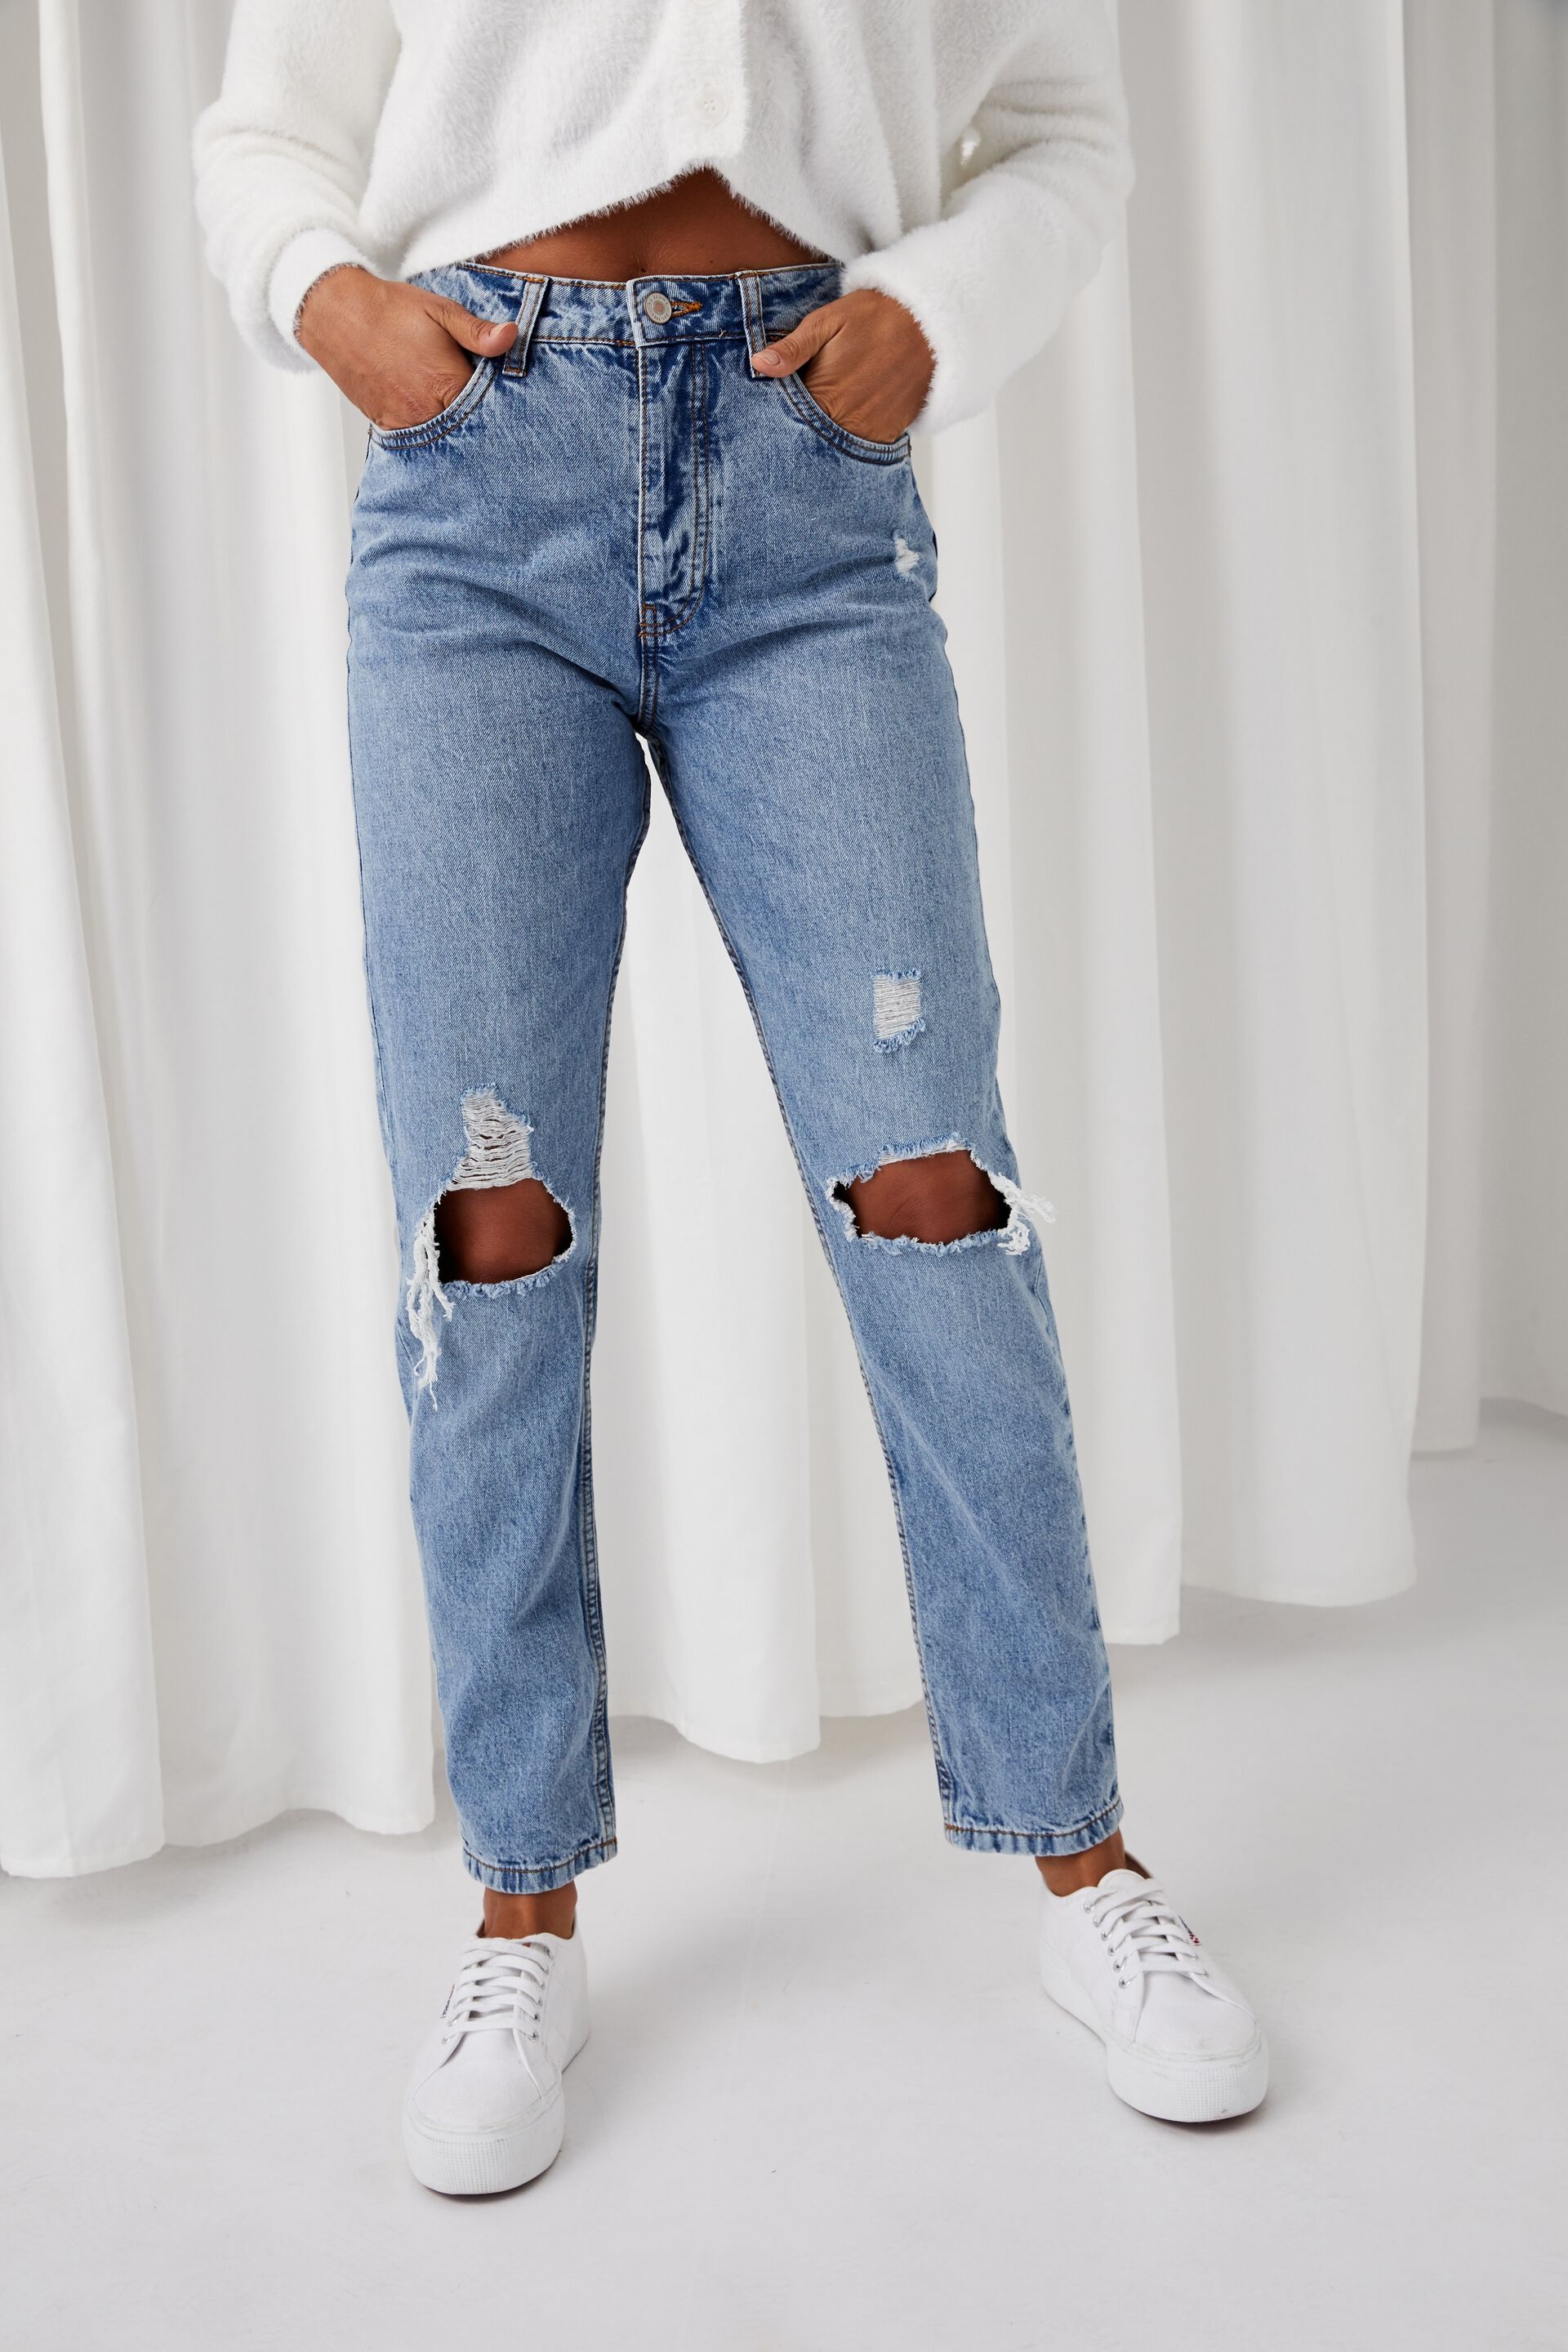 supre jeans sale